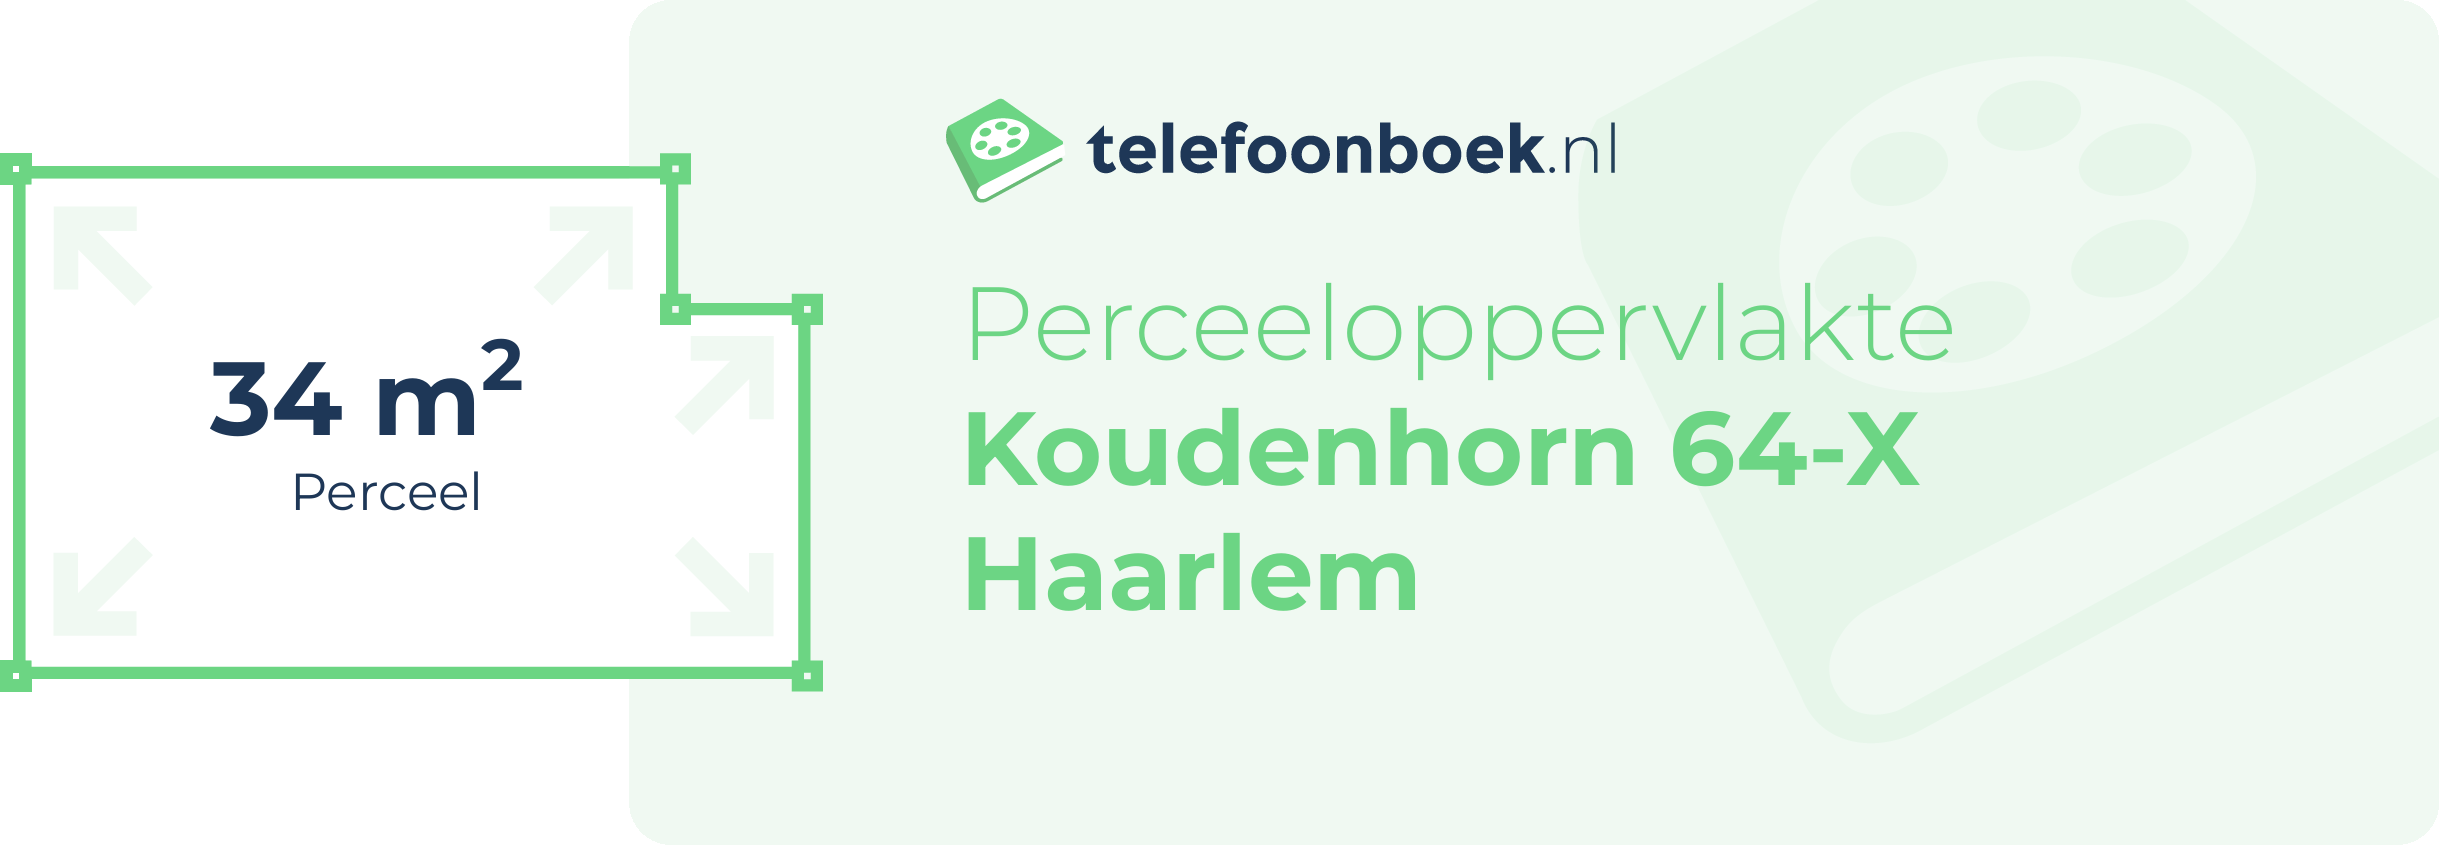 Perceeloppervlakte Koudenhorn 64-X Haarlem